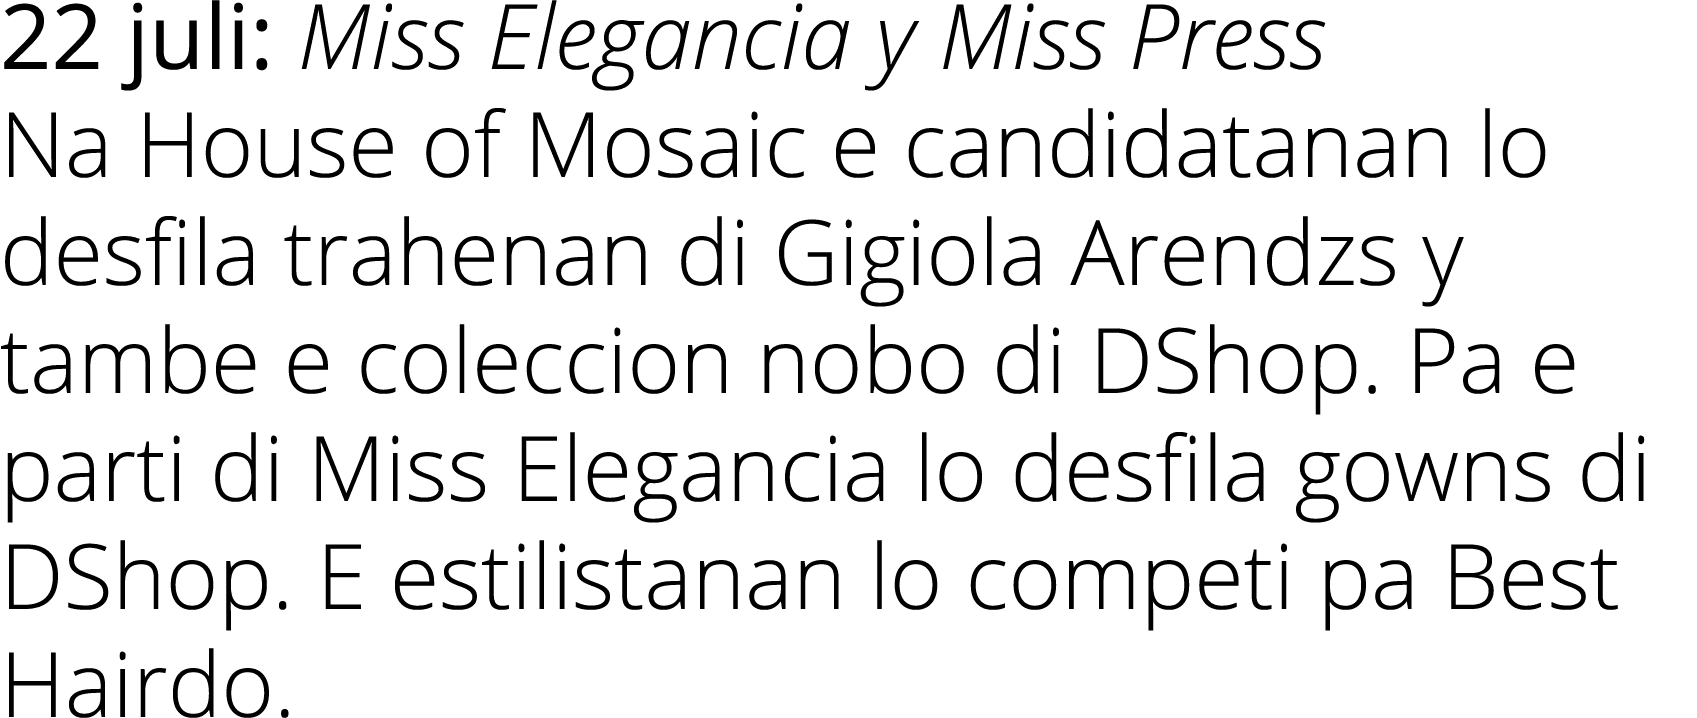 22 juli: Miss Elegancia y Miss Press Na House of Mosaic e candidatanan lo desfila trahenan di Gigiola Arendzs y tambe...